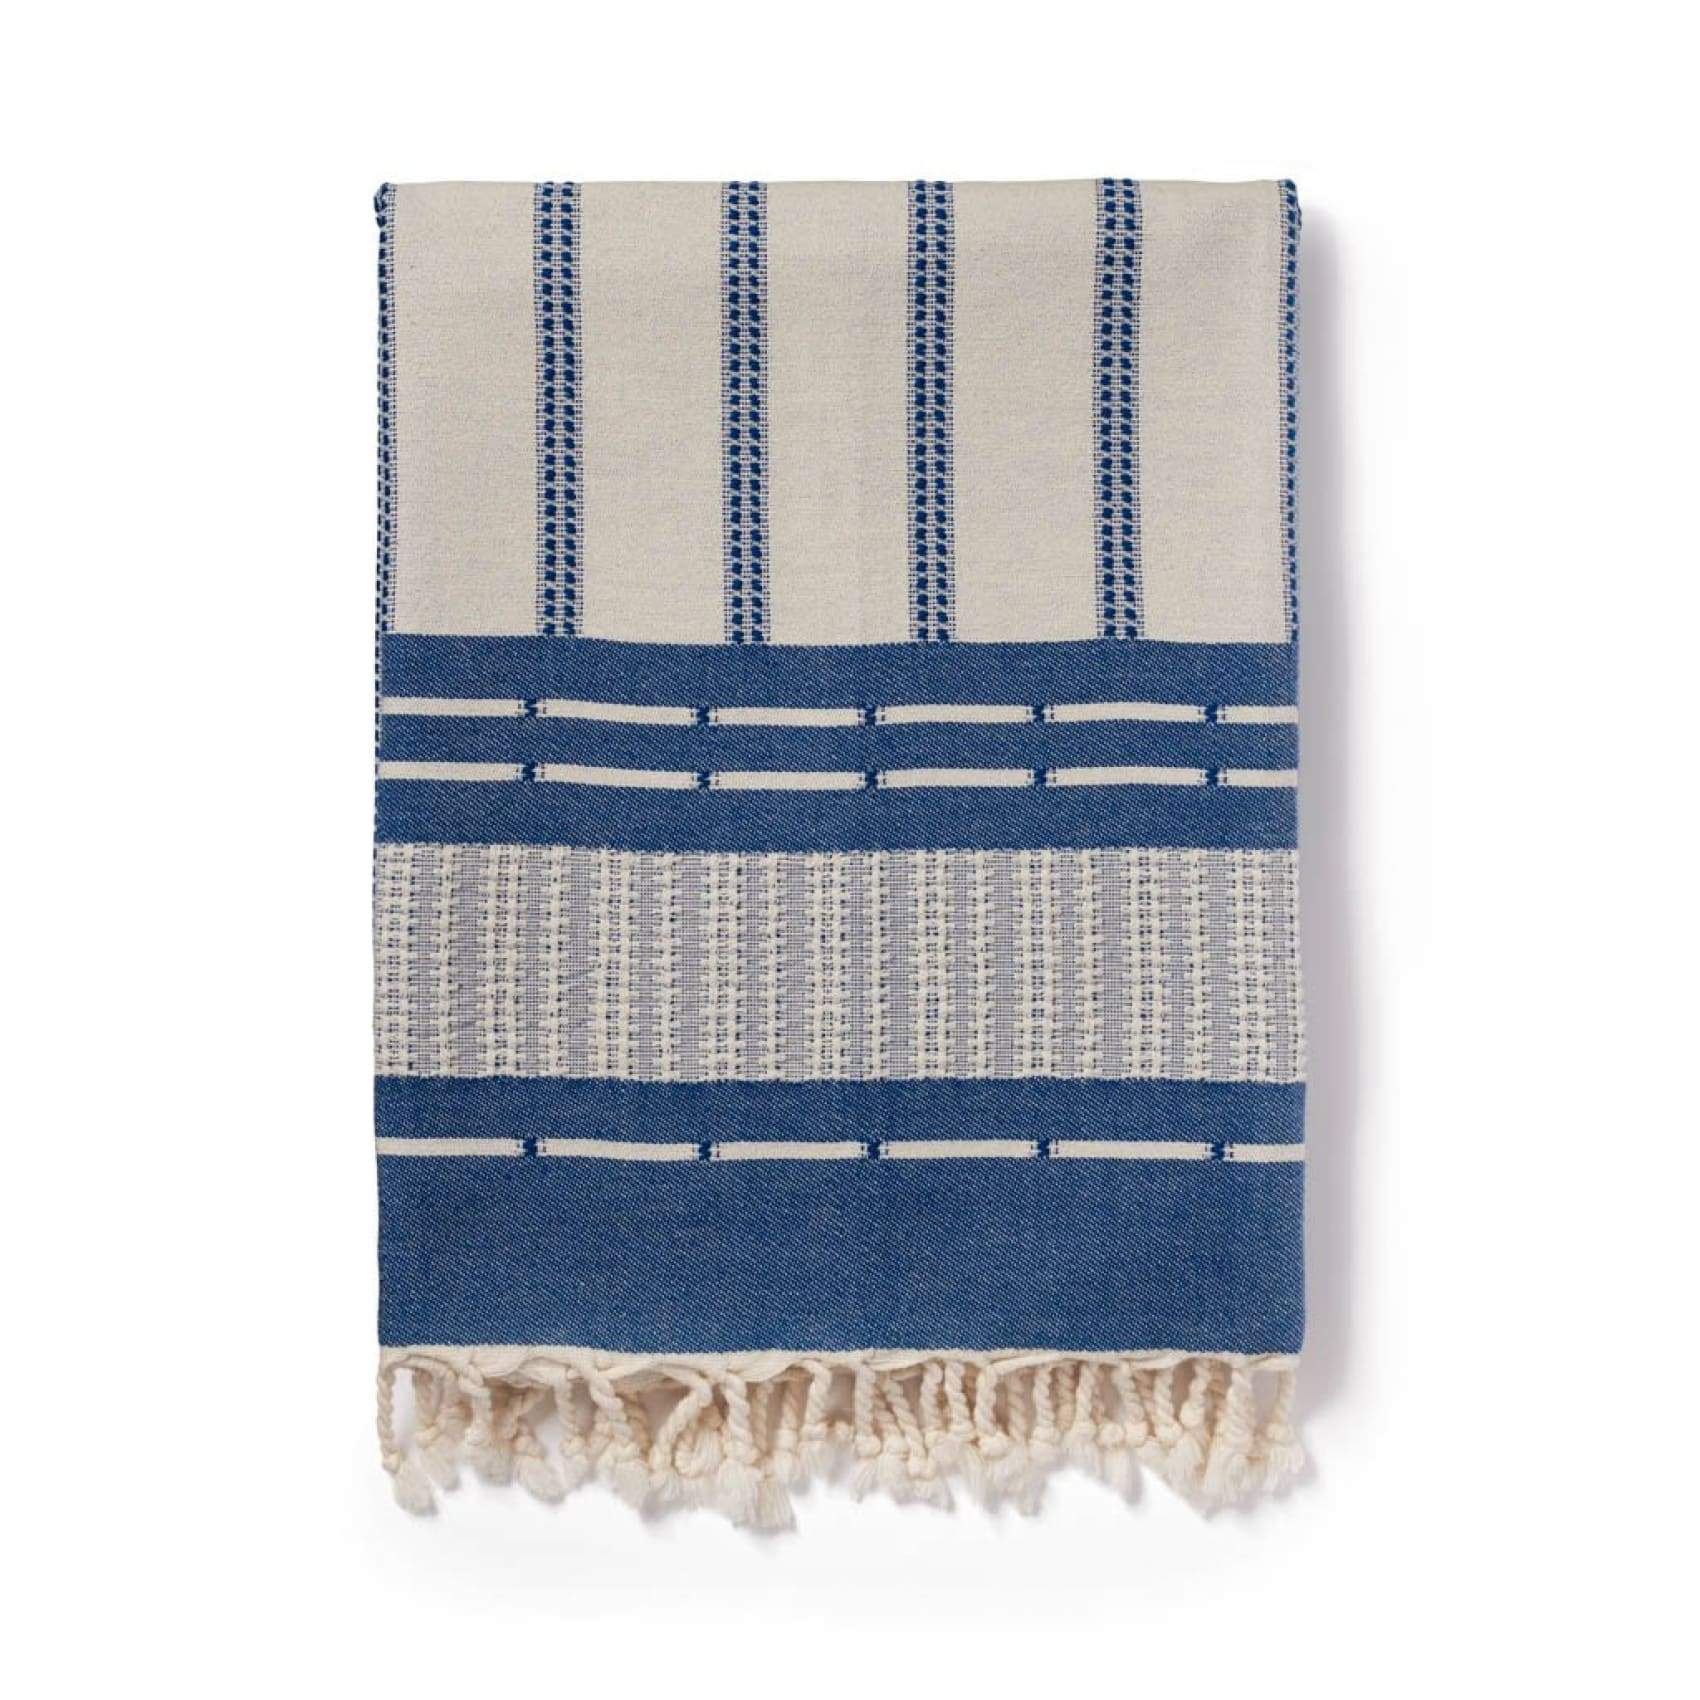 defne-deluxe-organic-cotton-peshtemals-summersale-luks-linen-blue-plaid-towel-489.jpg